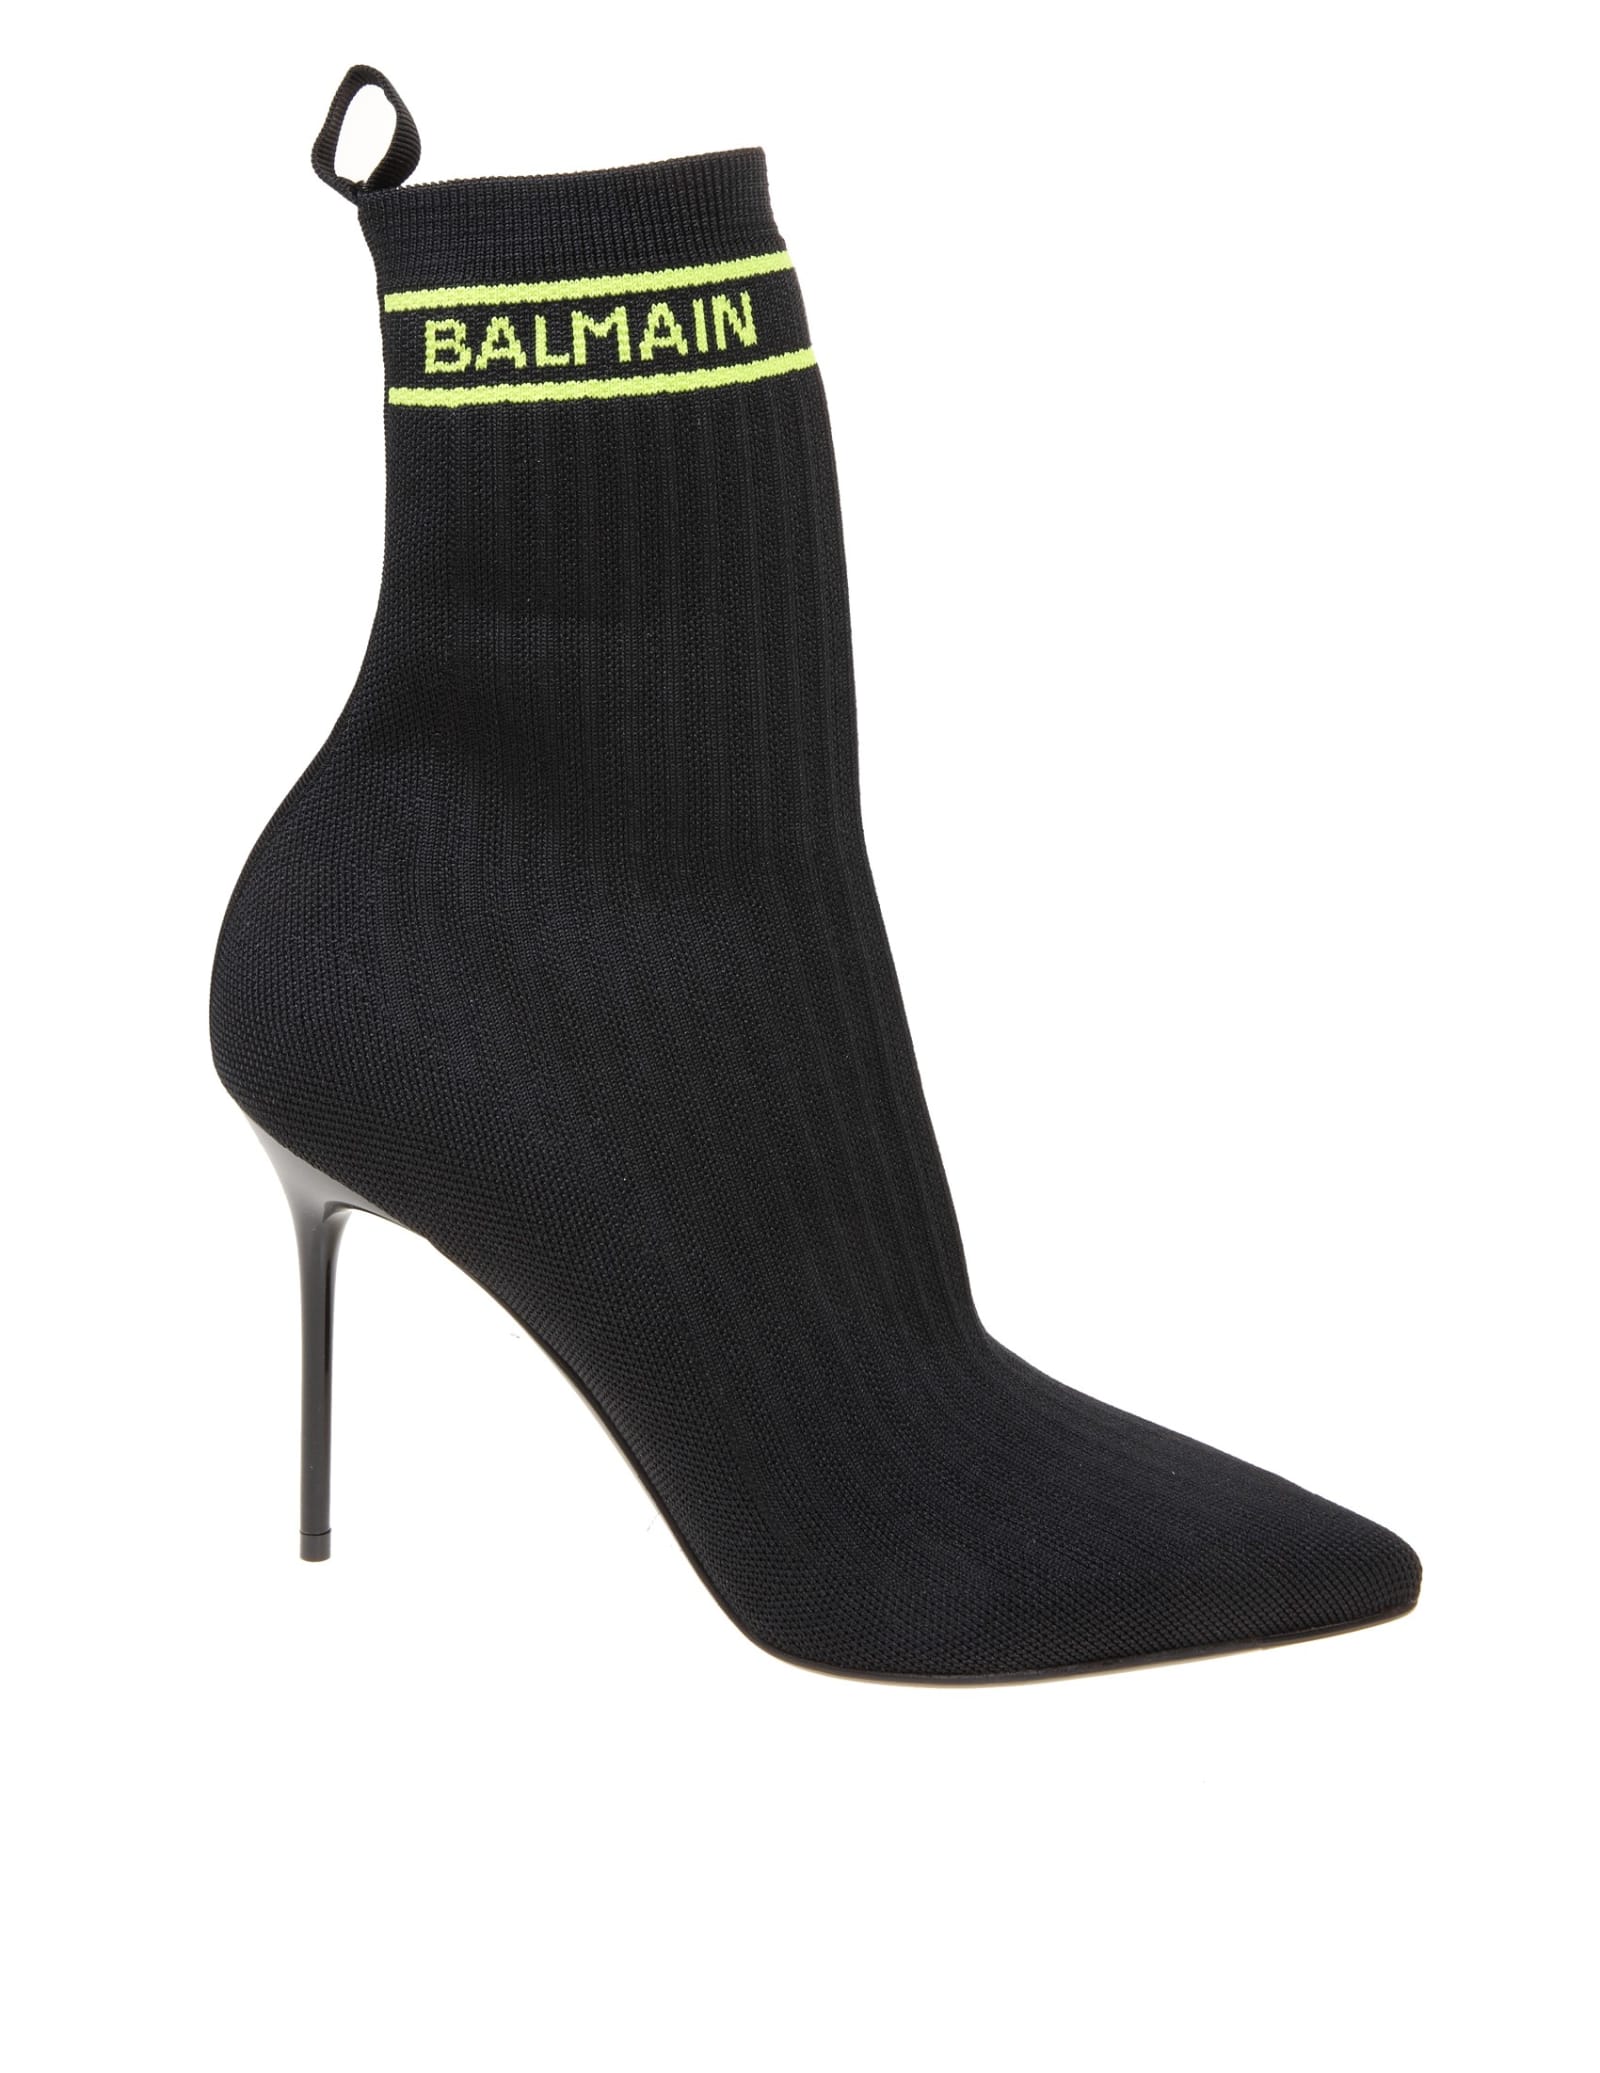 Buy Balmain Skye Boots In Black Stretch Knit online, shop Balmain shoes with free shipping